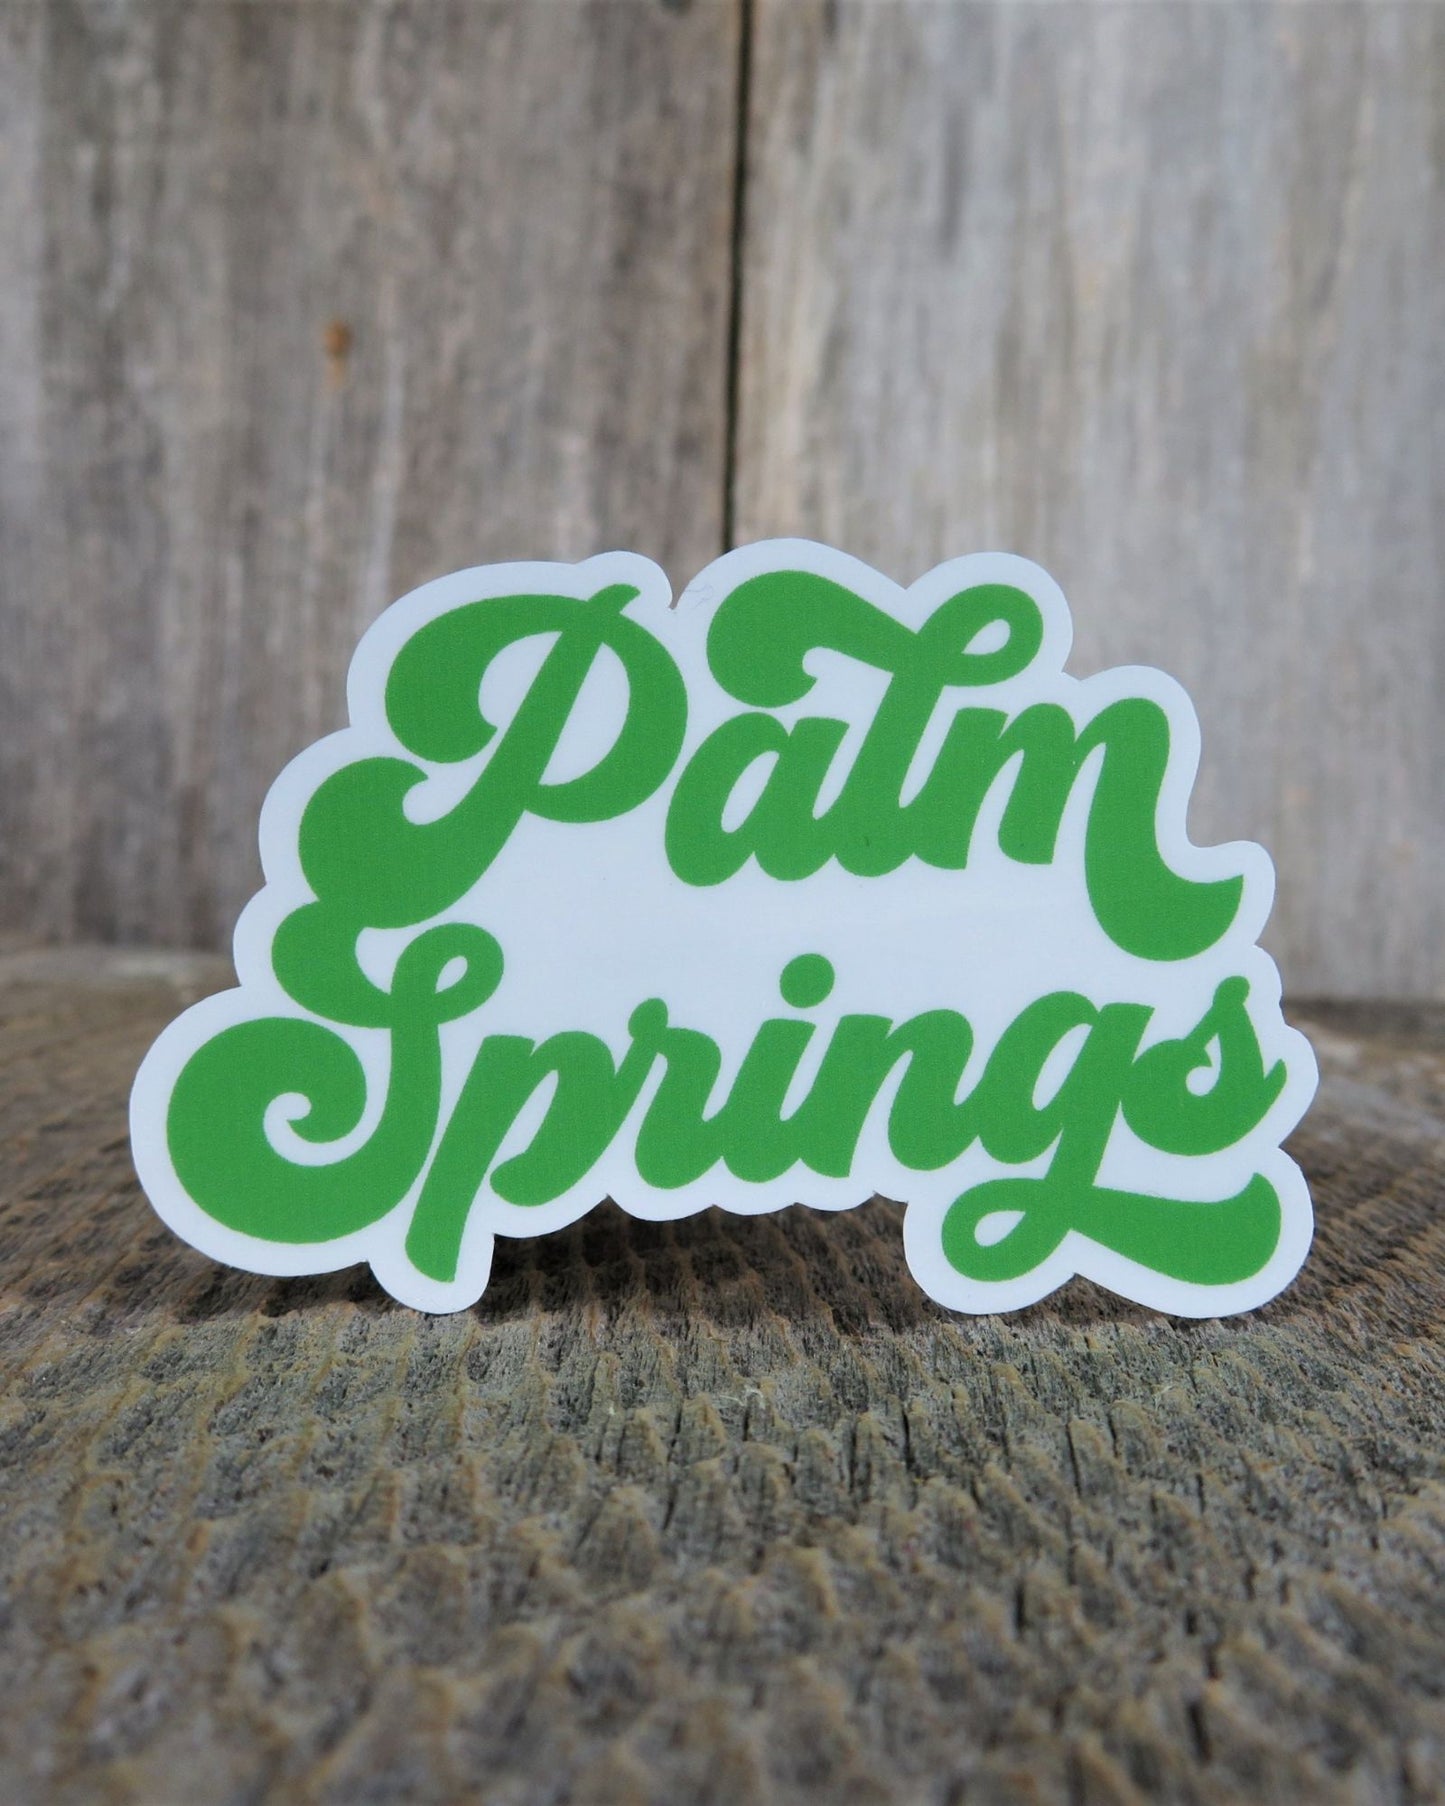 Palm Springs California Sticker Waterproof Green Retro Bubble Letters Destination Souvenir Travel Sticker